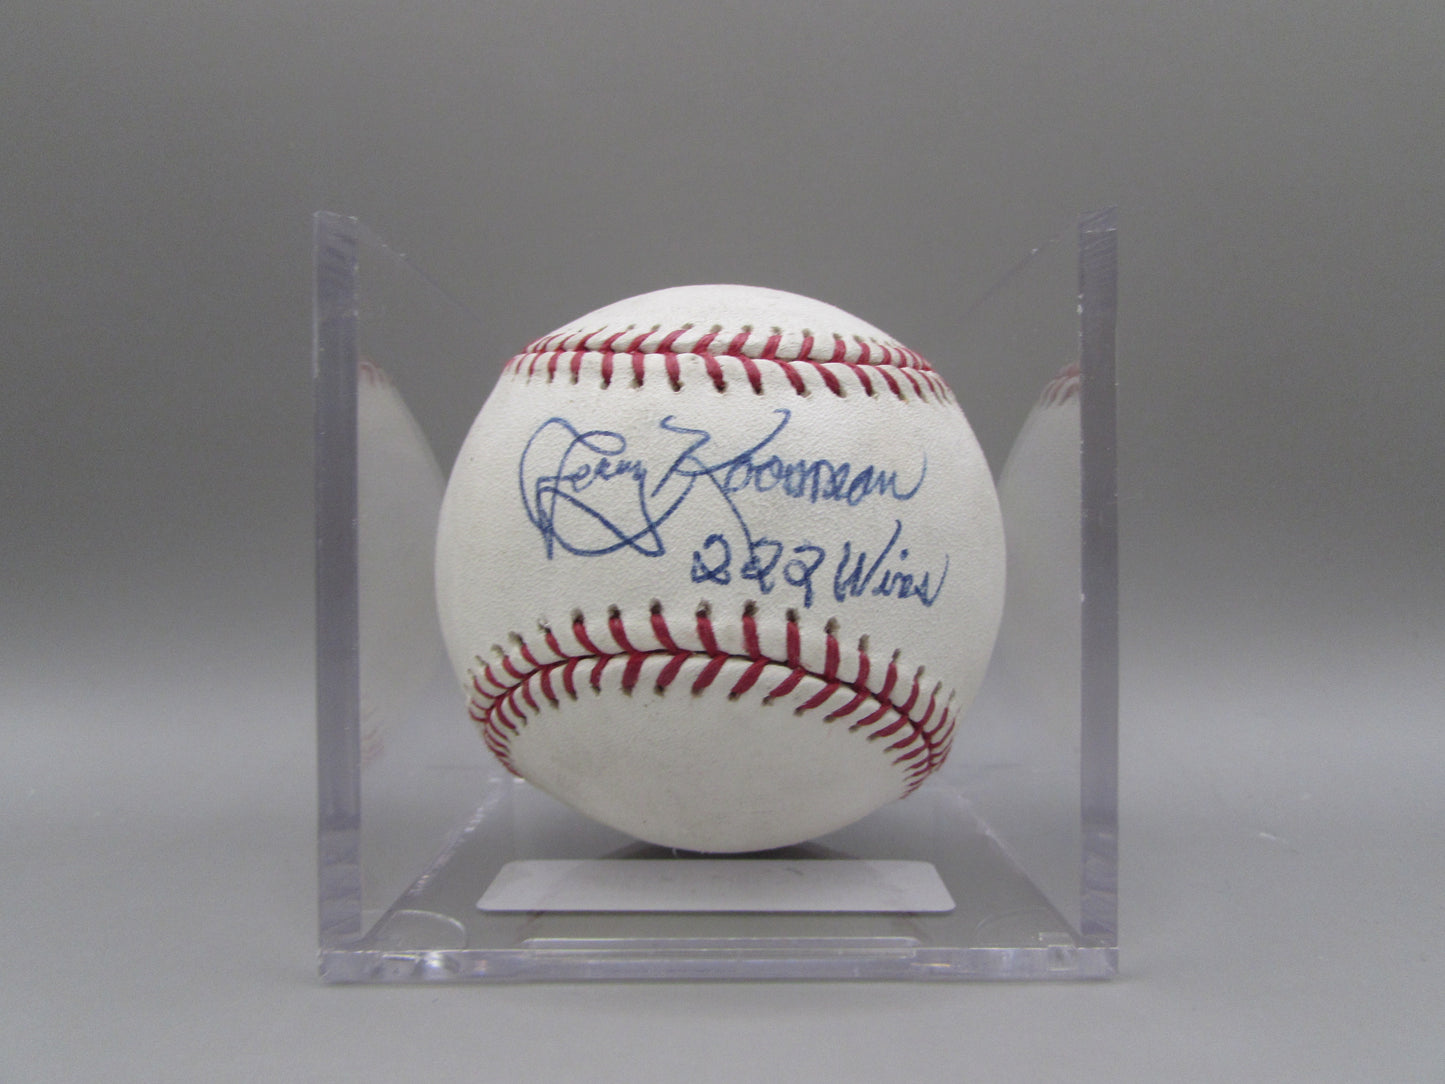 Jerry Koosman signed baseball